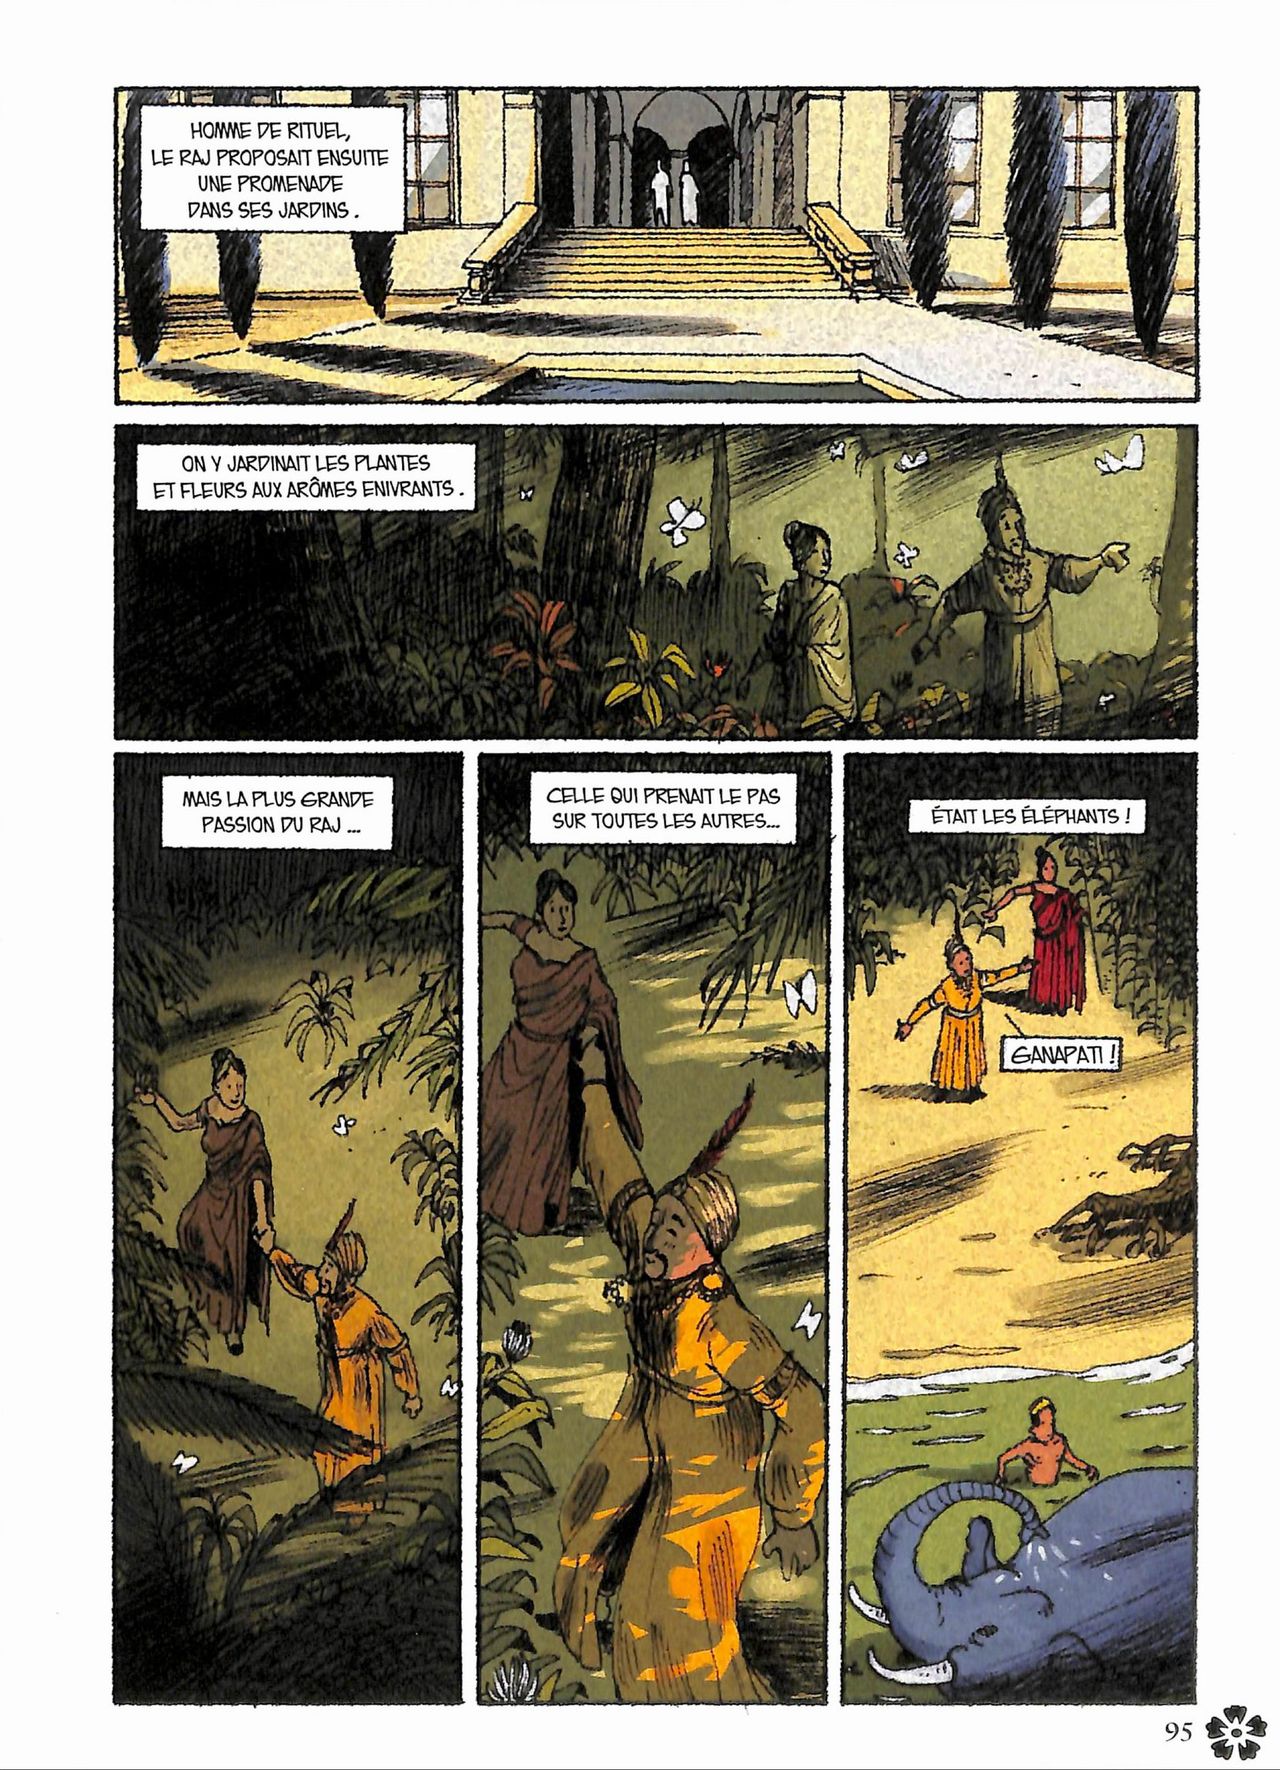 Kama Sutra en bandes dessinées - Kama Sutra with Comics numero d'image 96